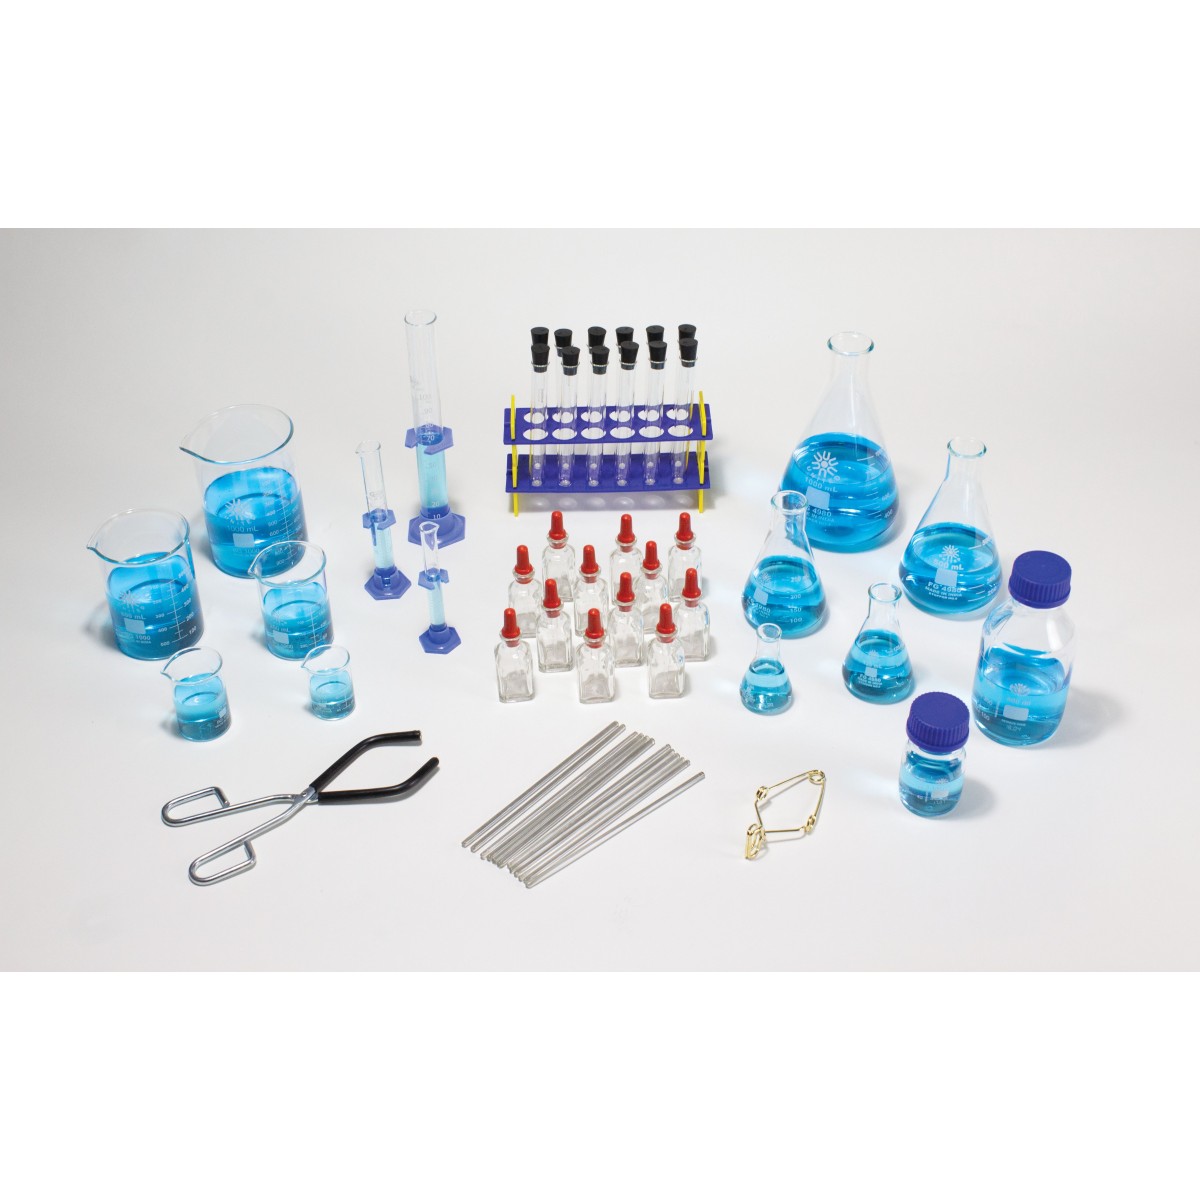 General Lab Glassware Starter Kit - Labware Kits - Lab Supplies